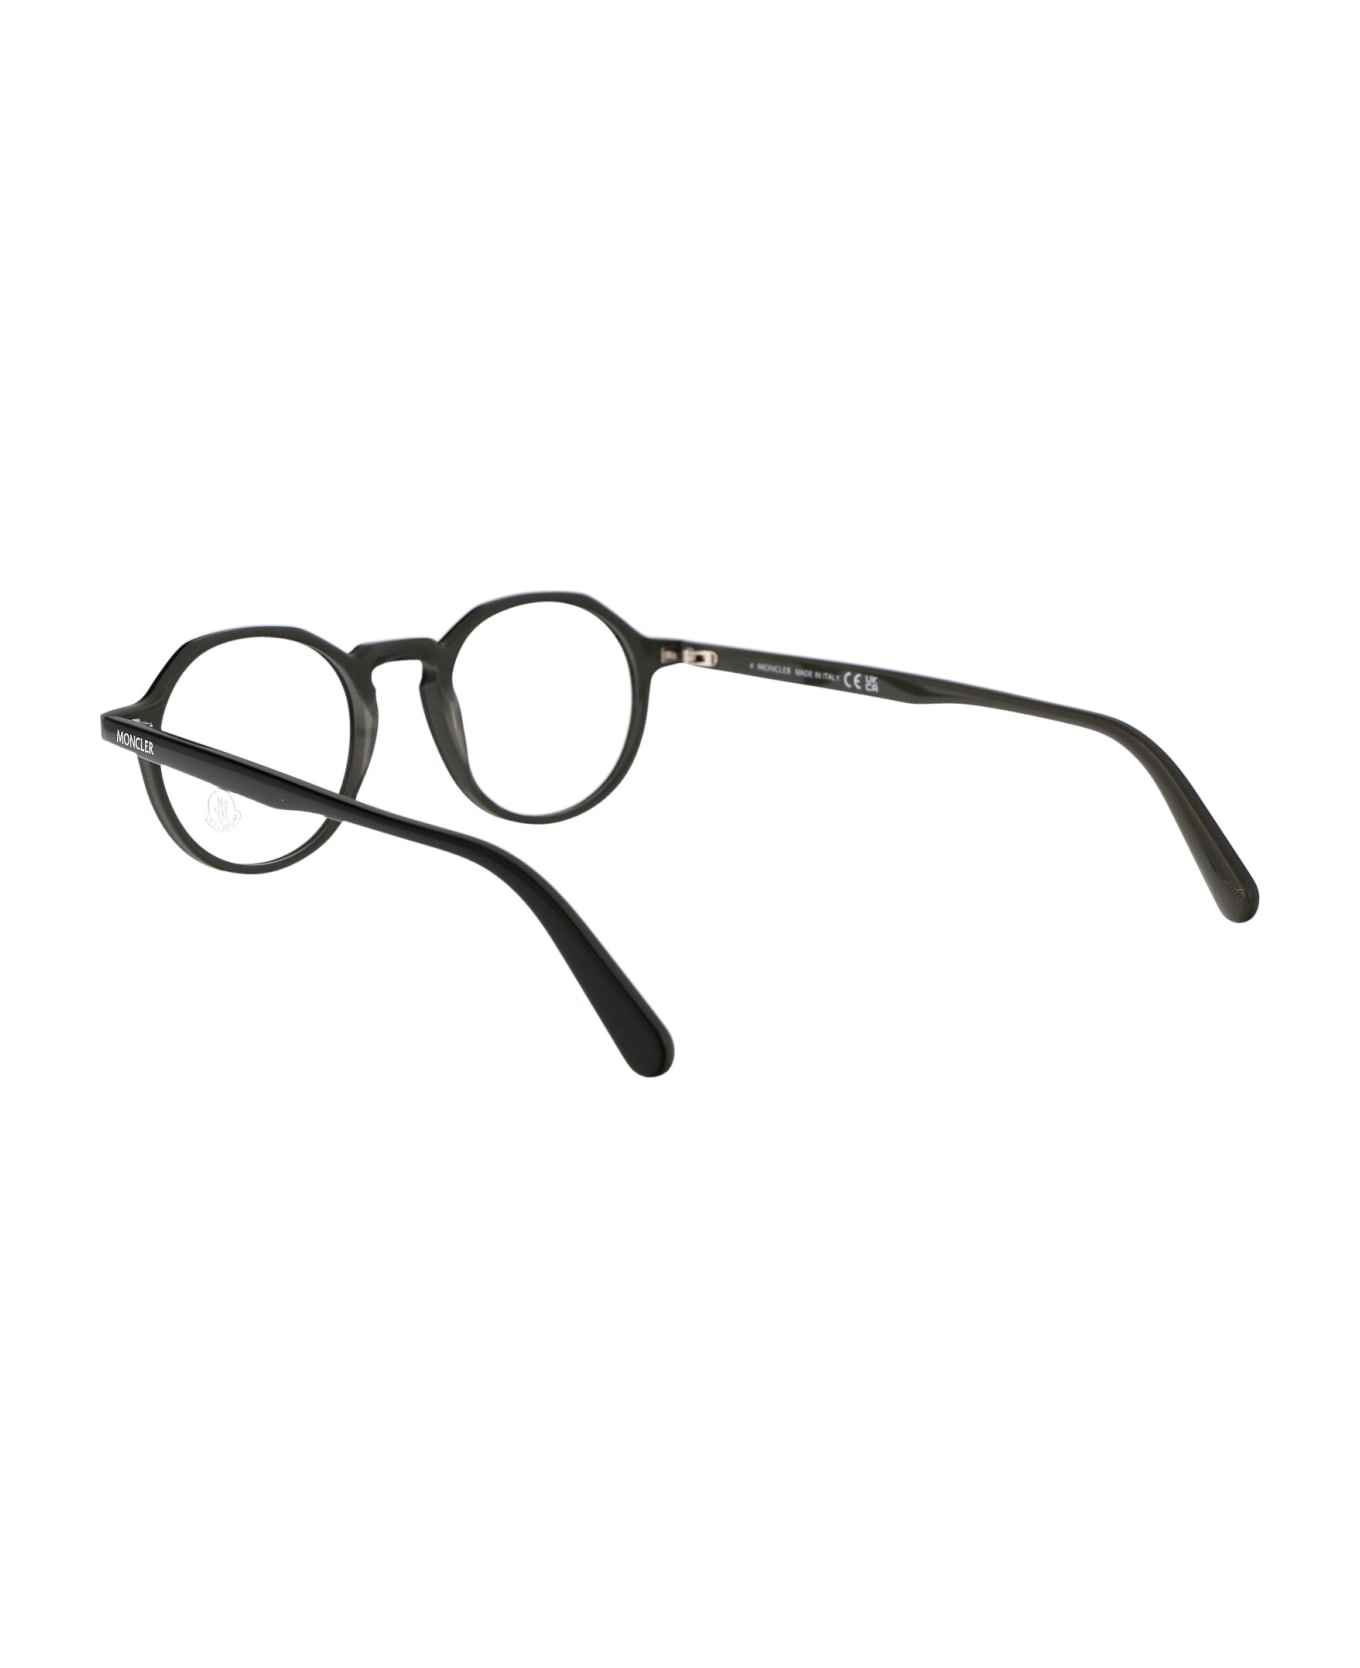 Moncler Eyewear Ml5120 Glasses - 005 Nero/Monocolore アイウェア